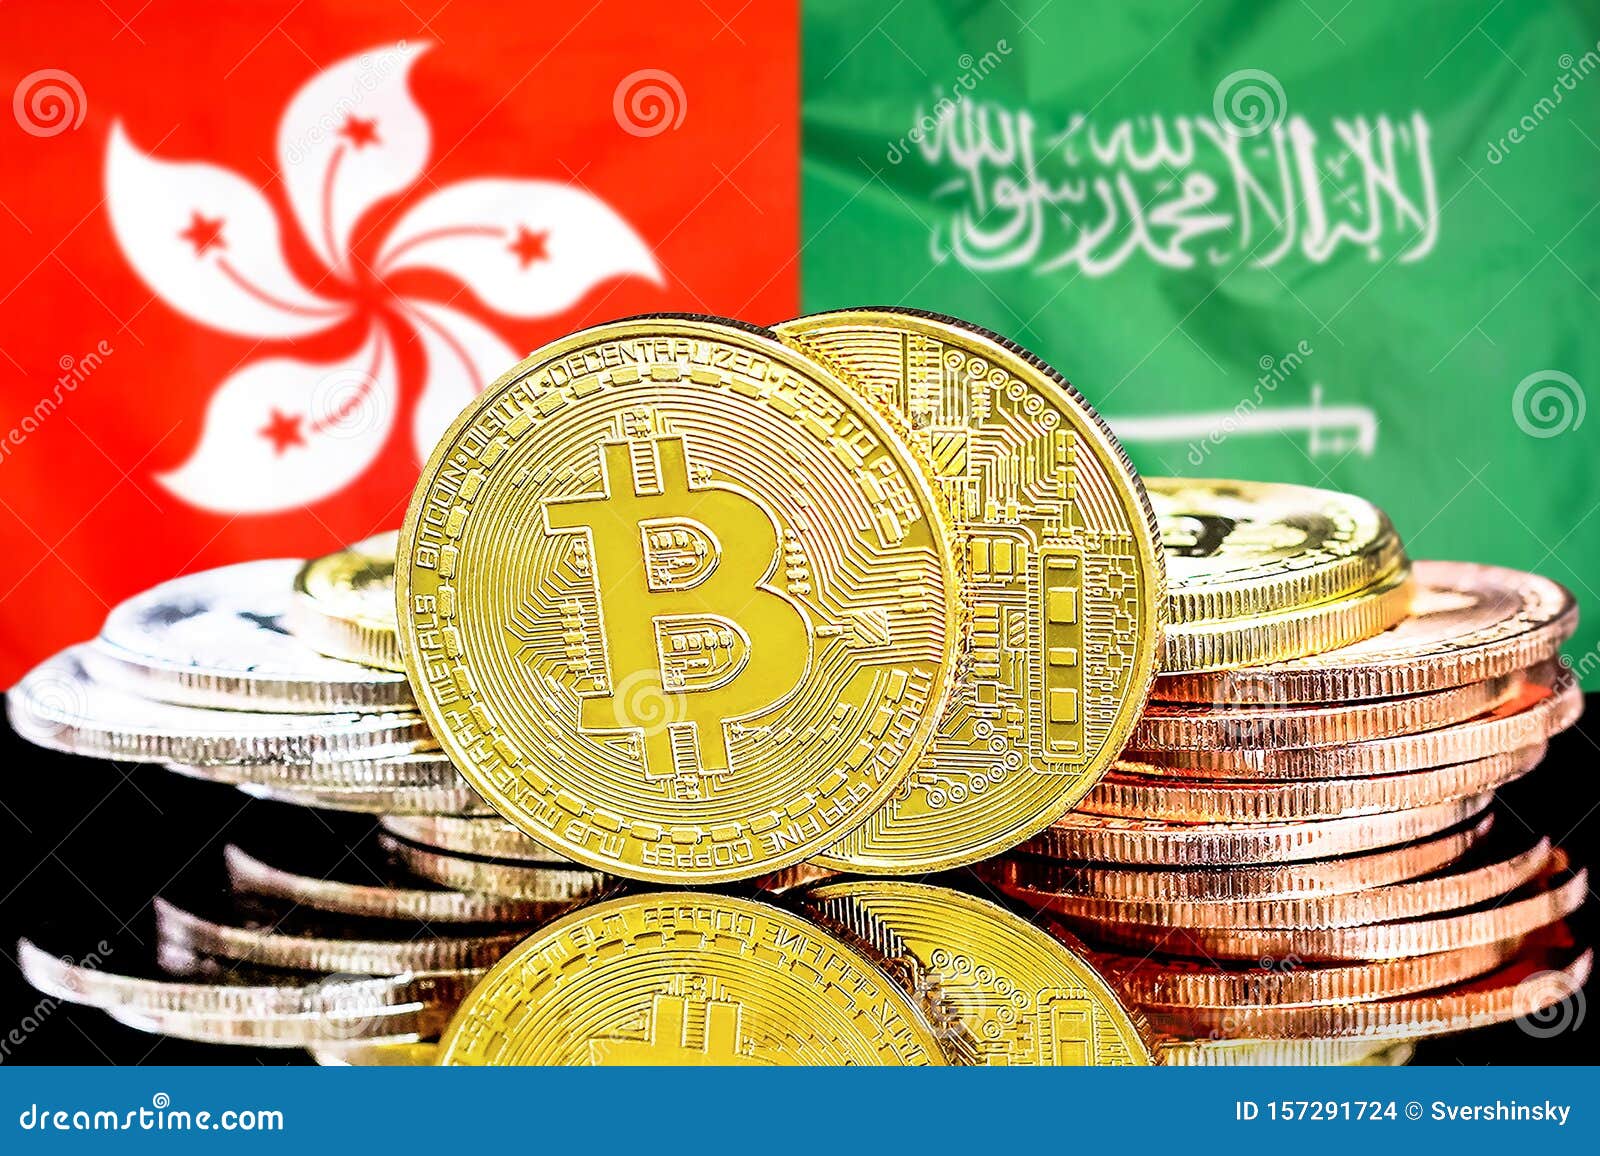 buy bitcoins instantly in saudi arabia